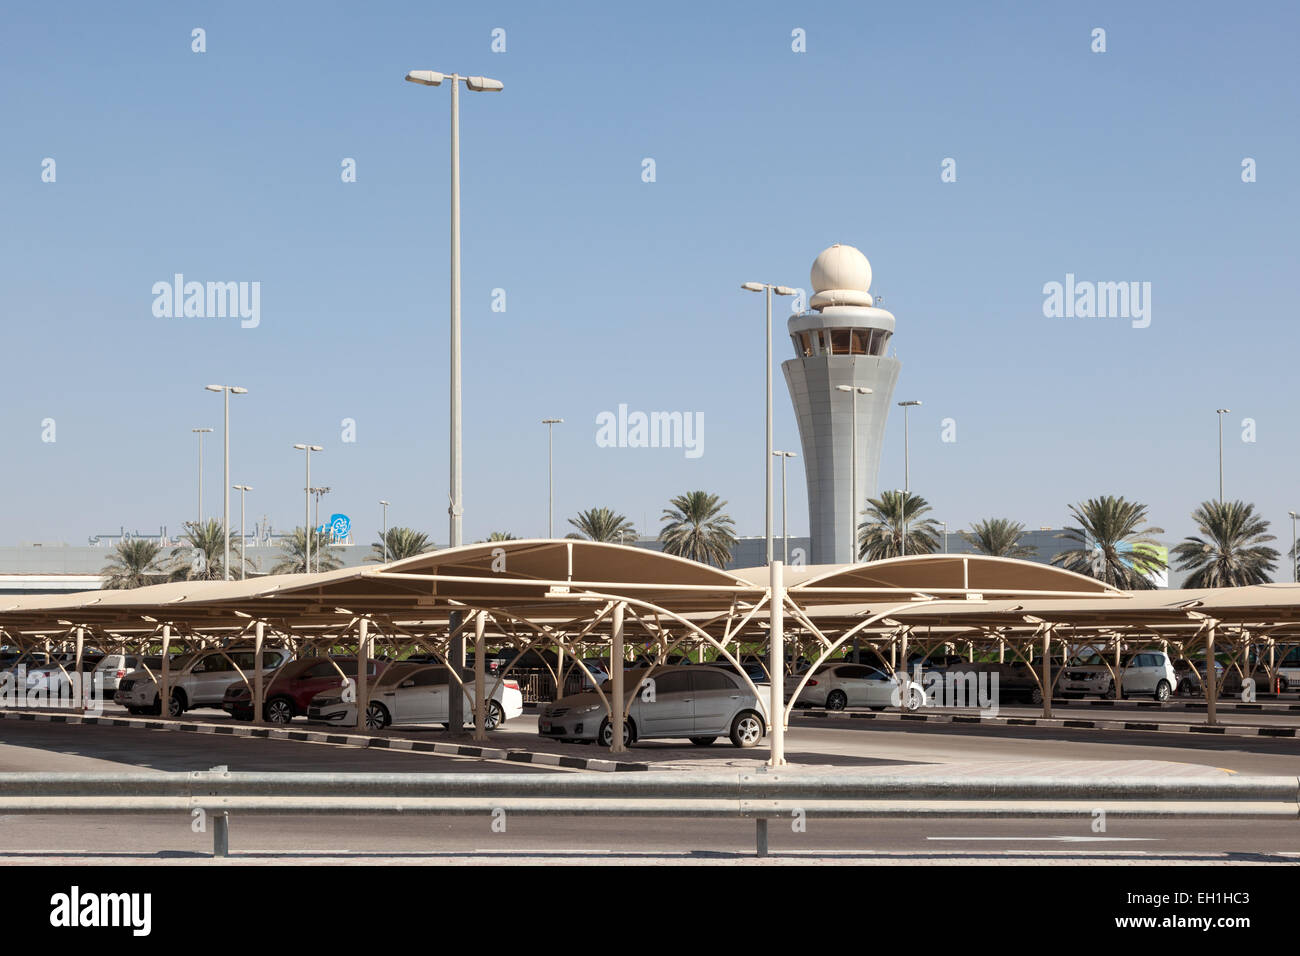 Exterior of the Abu Dhabi International Airport. December 19, 2014 in Abu Dhabi, United Arab Emirates Stock Photo